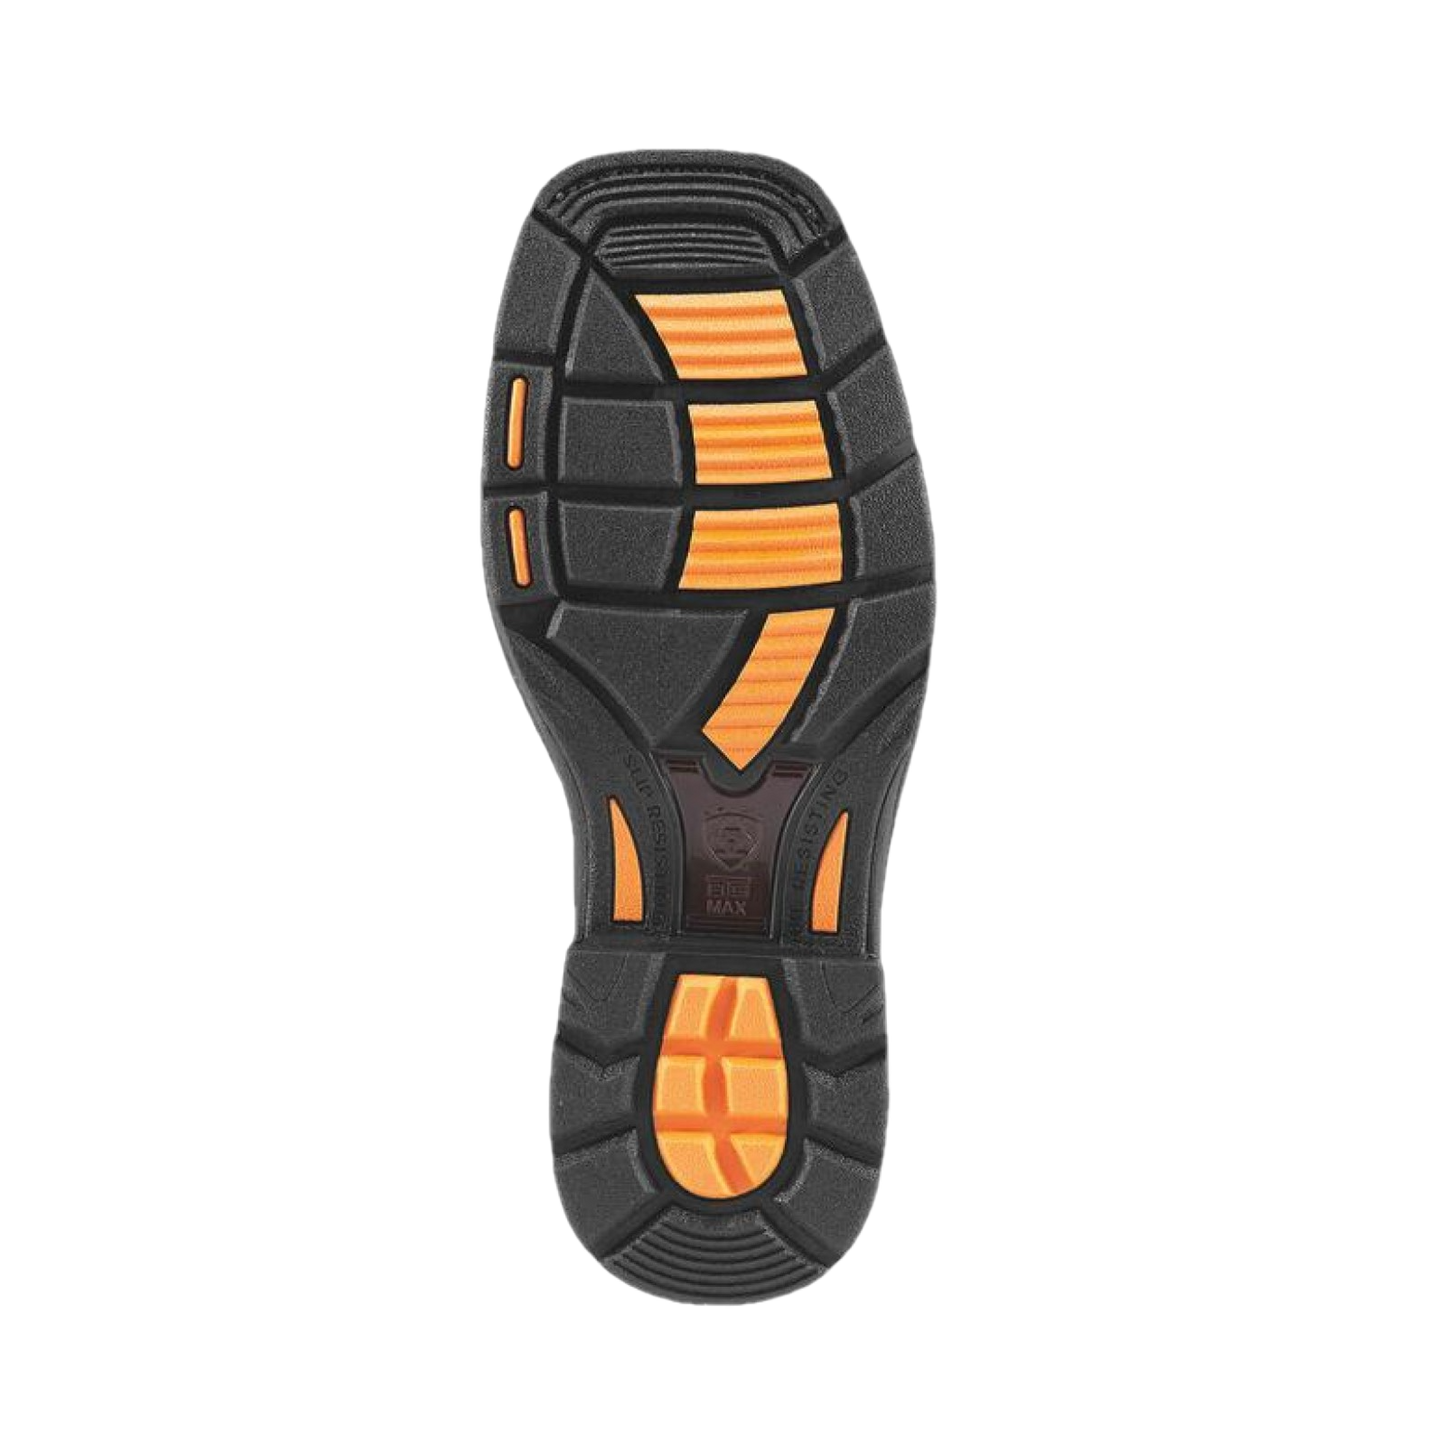 Ariat® Men's Workhog® Mesteño Earth Brown Composite Toe Boots 10010892